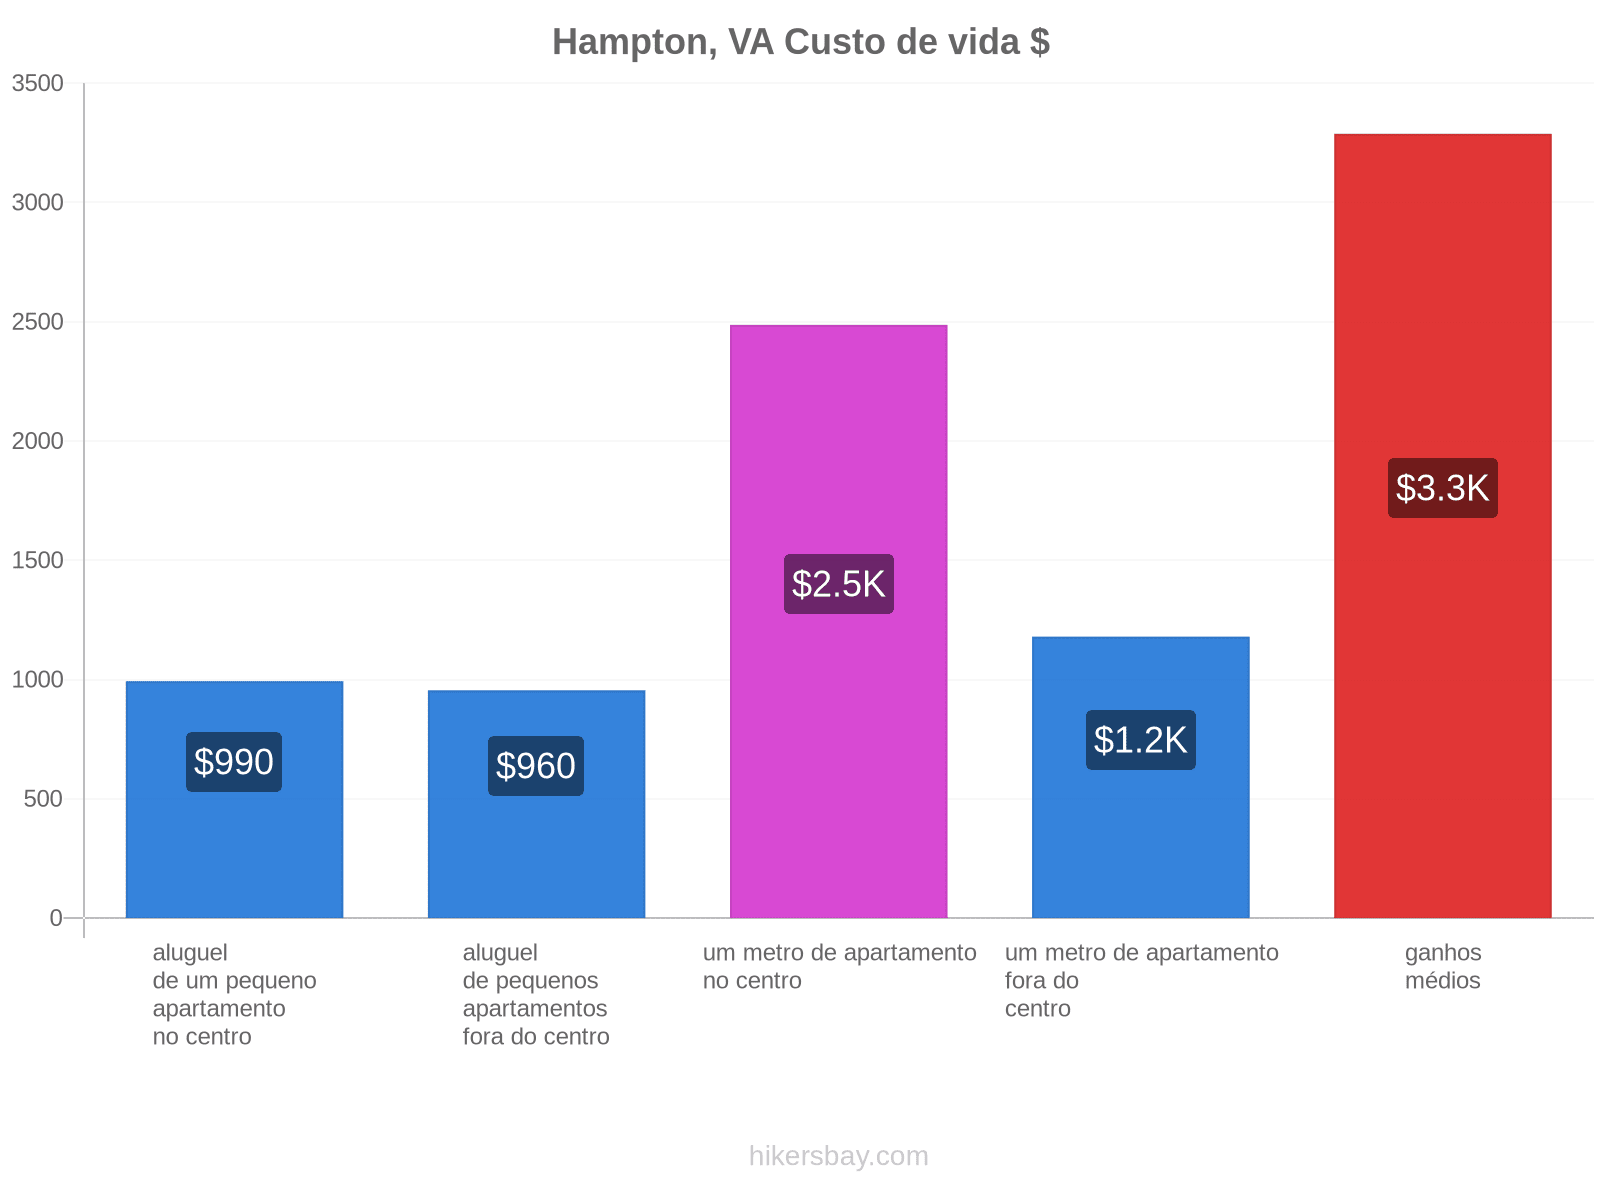 Hampton, VA custo de vida hikersbay.com